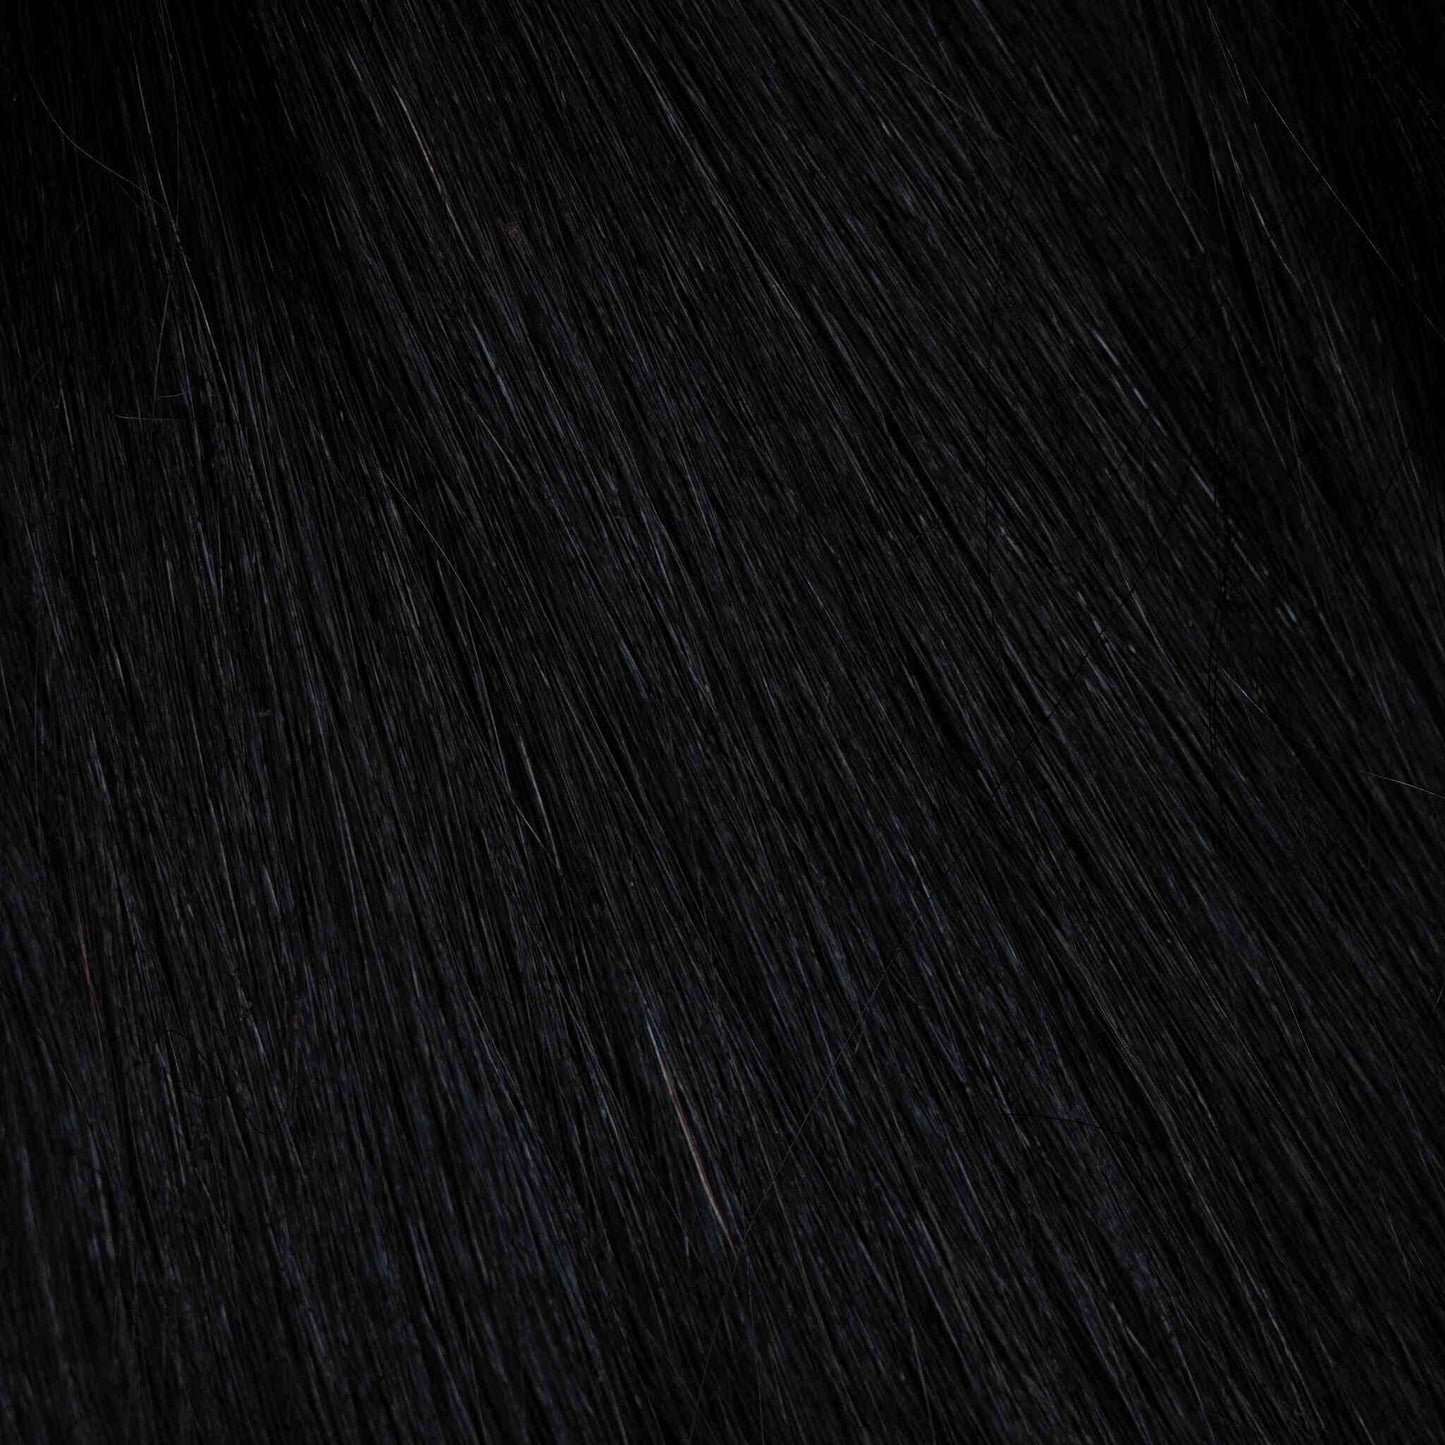 Genius (Micro) Weft 18" 68g Professional Hair Extensions - #1 Jet Black